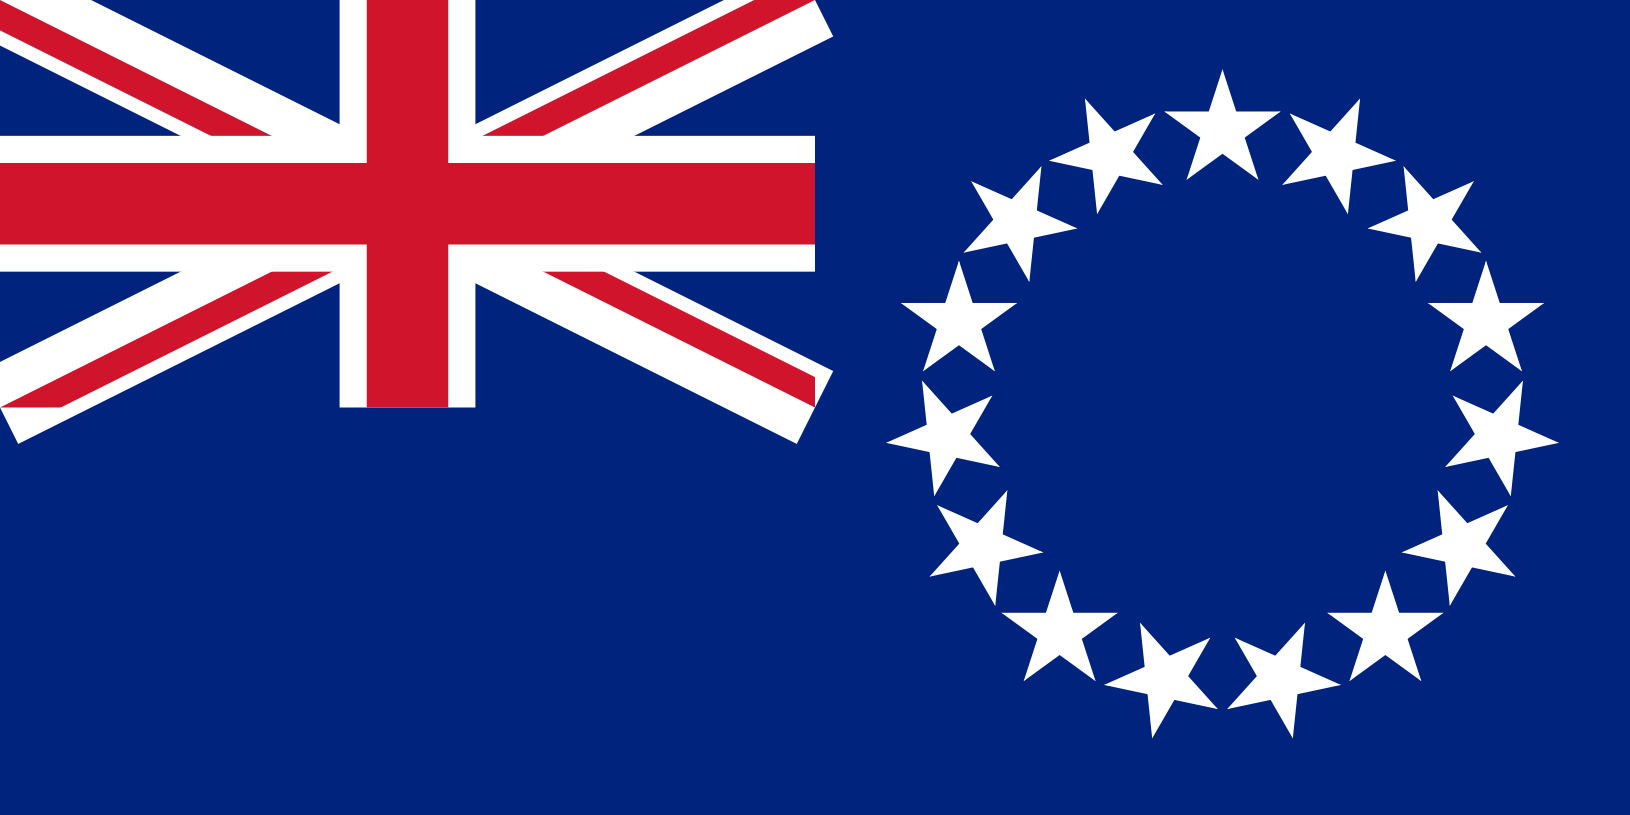 Podoba nacionalno zastavo države Cookovi otoki v resoluciji 1630x815